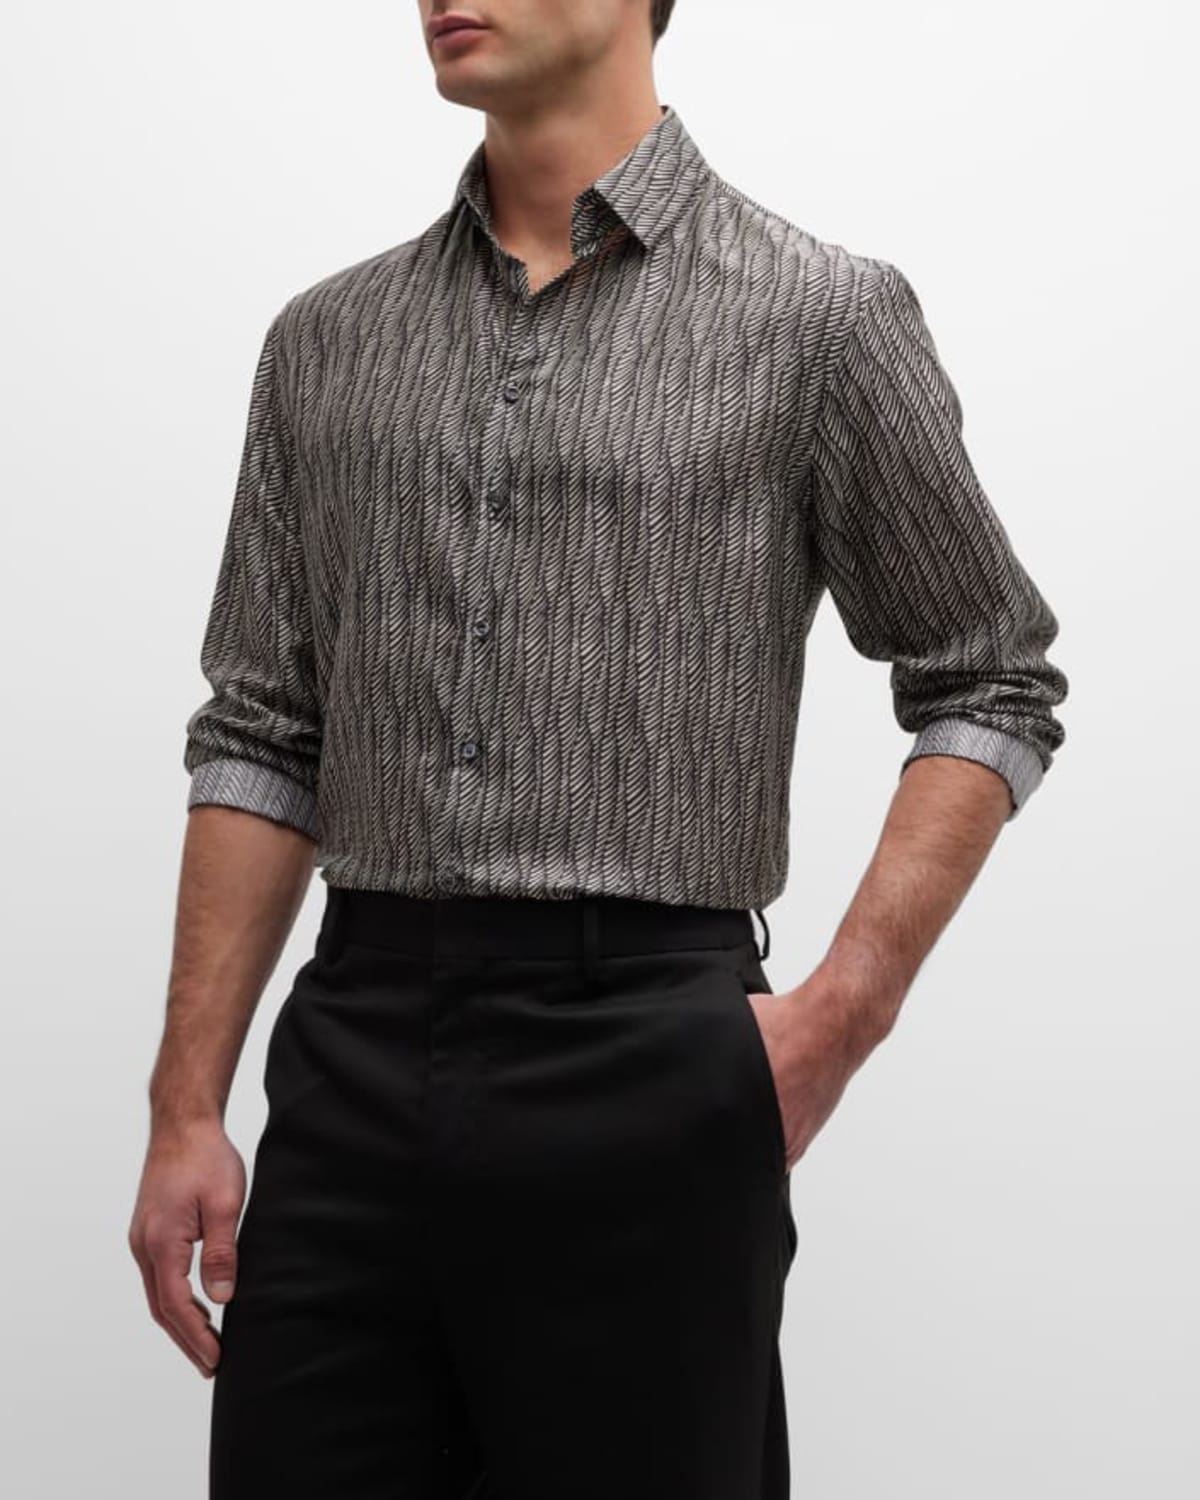 Giorgio Armani Men's Printed Silk Sport Shirt In Solid Medium Grey